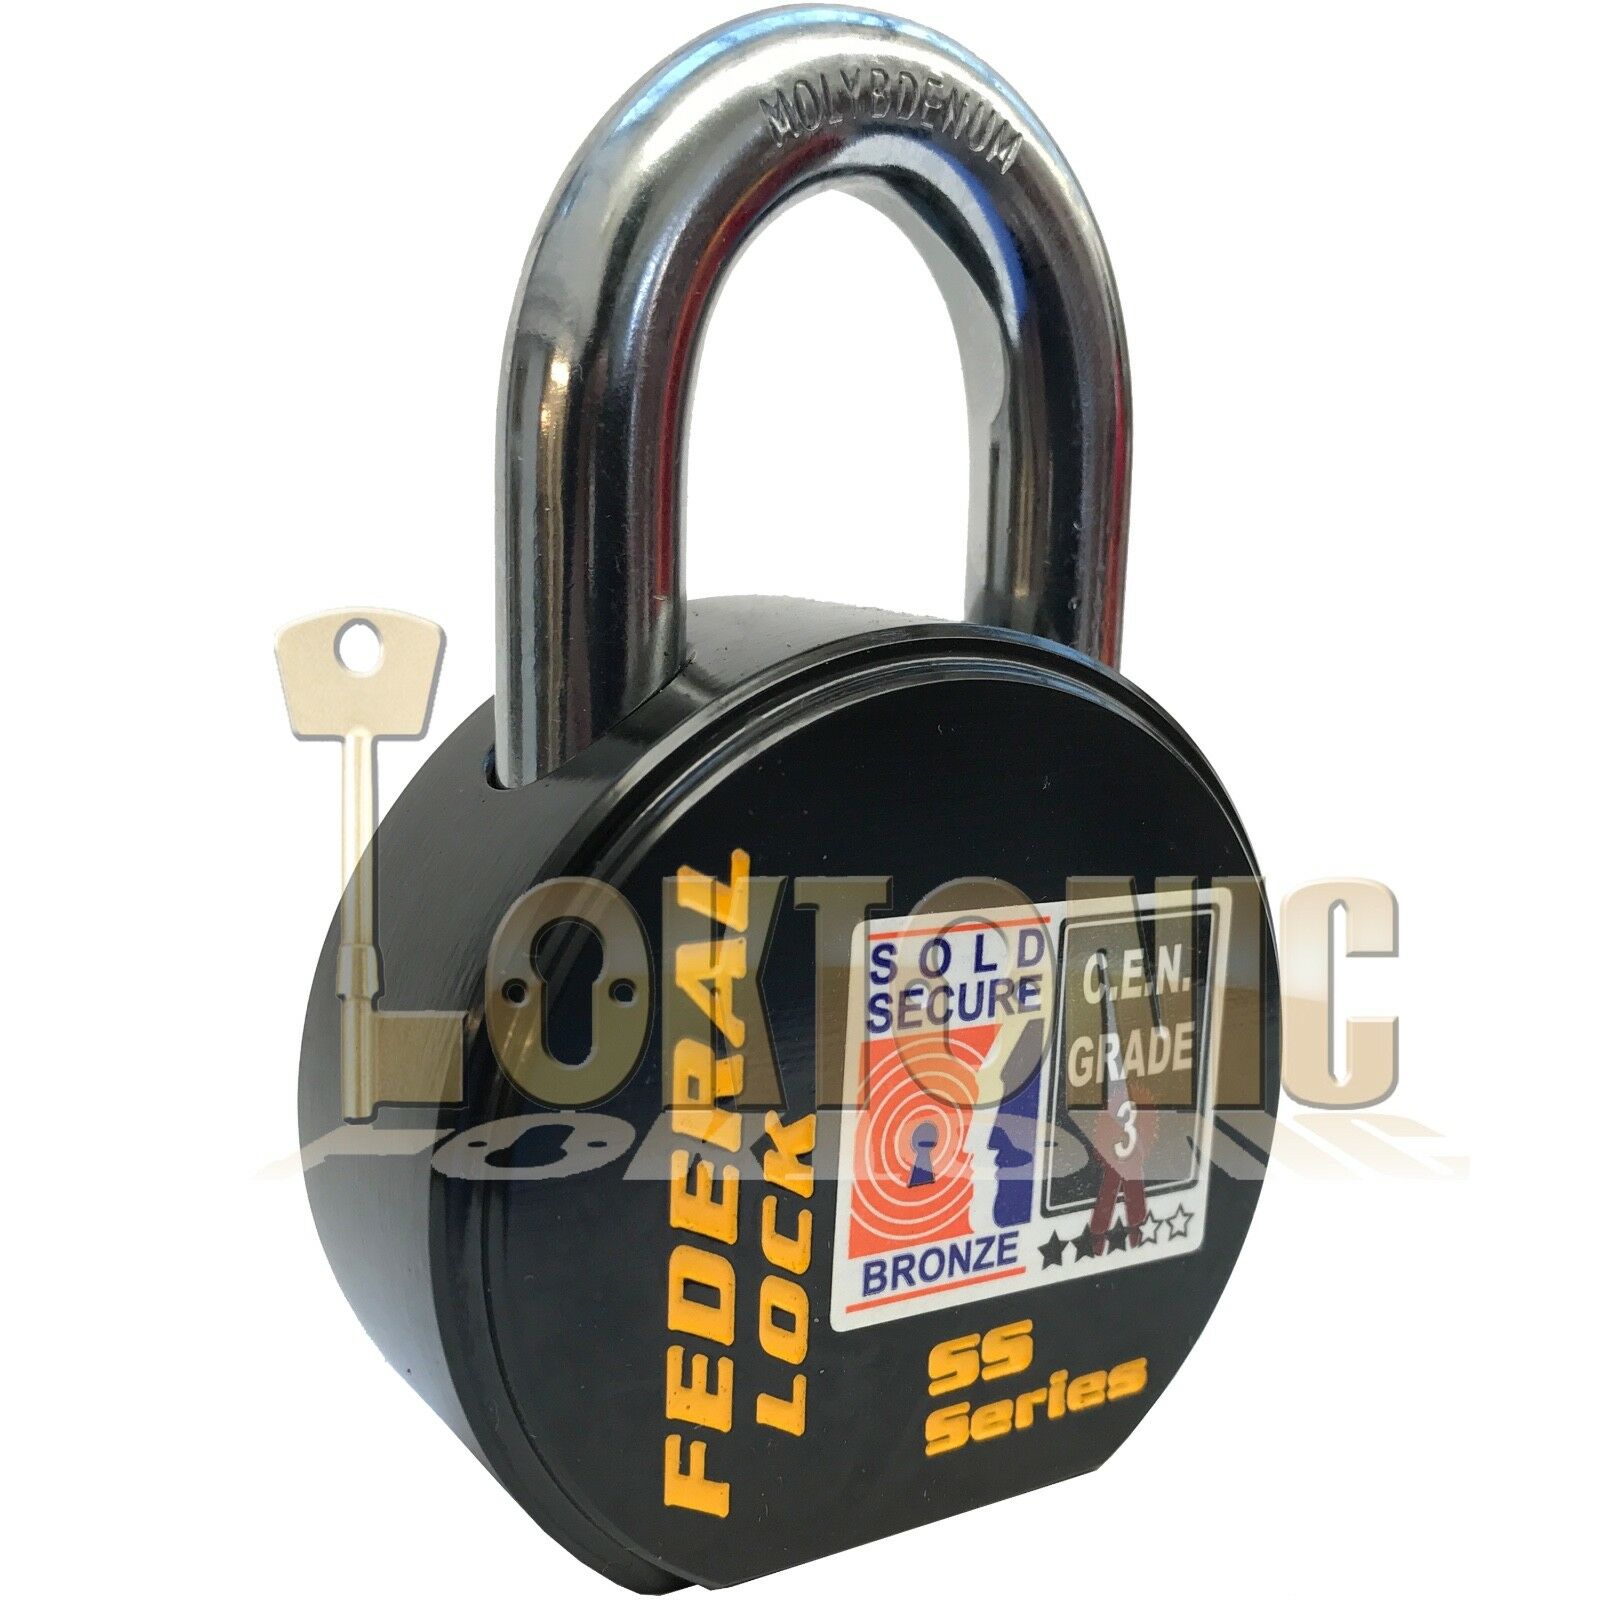 sold secure padlock